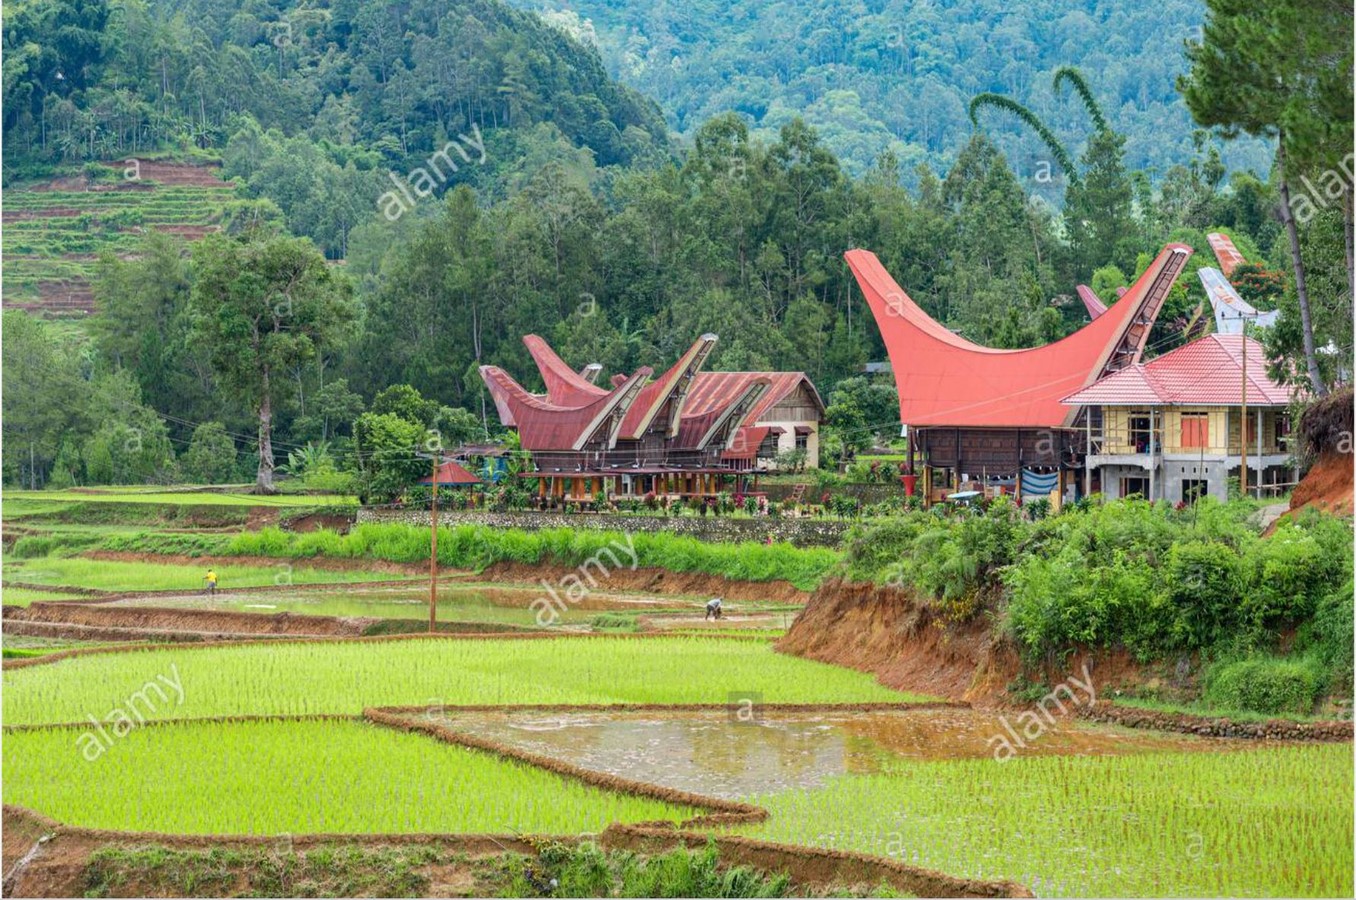 An overview of Toraja Houses - Sheet4